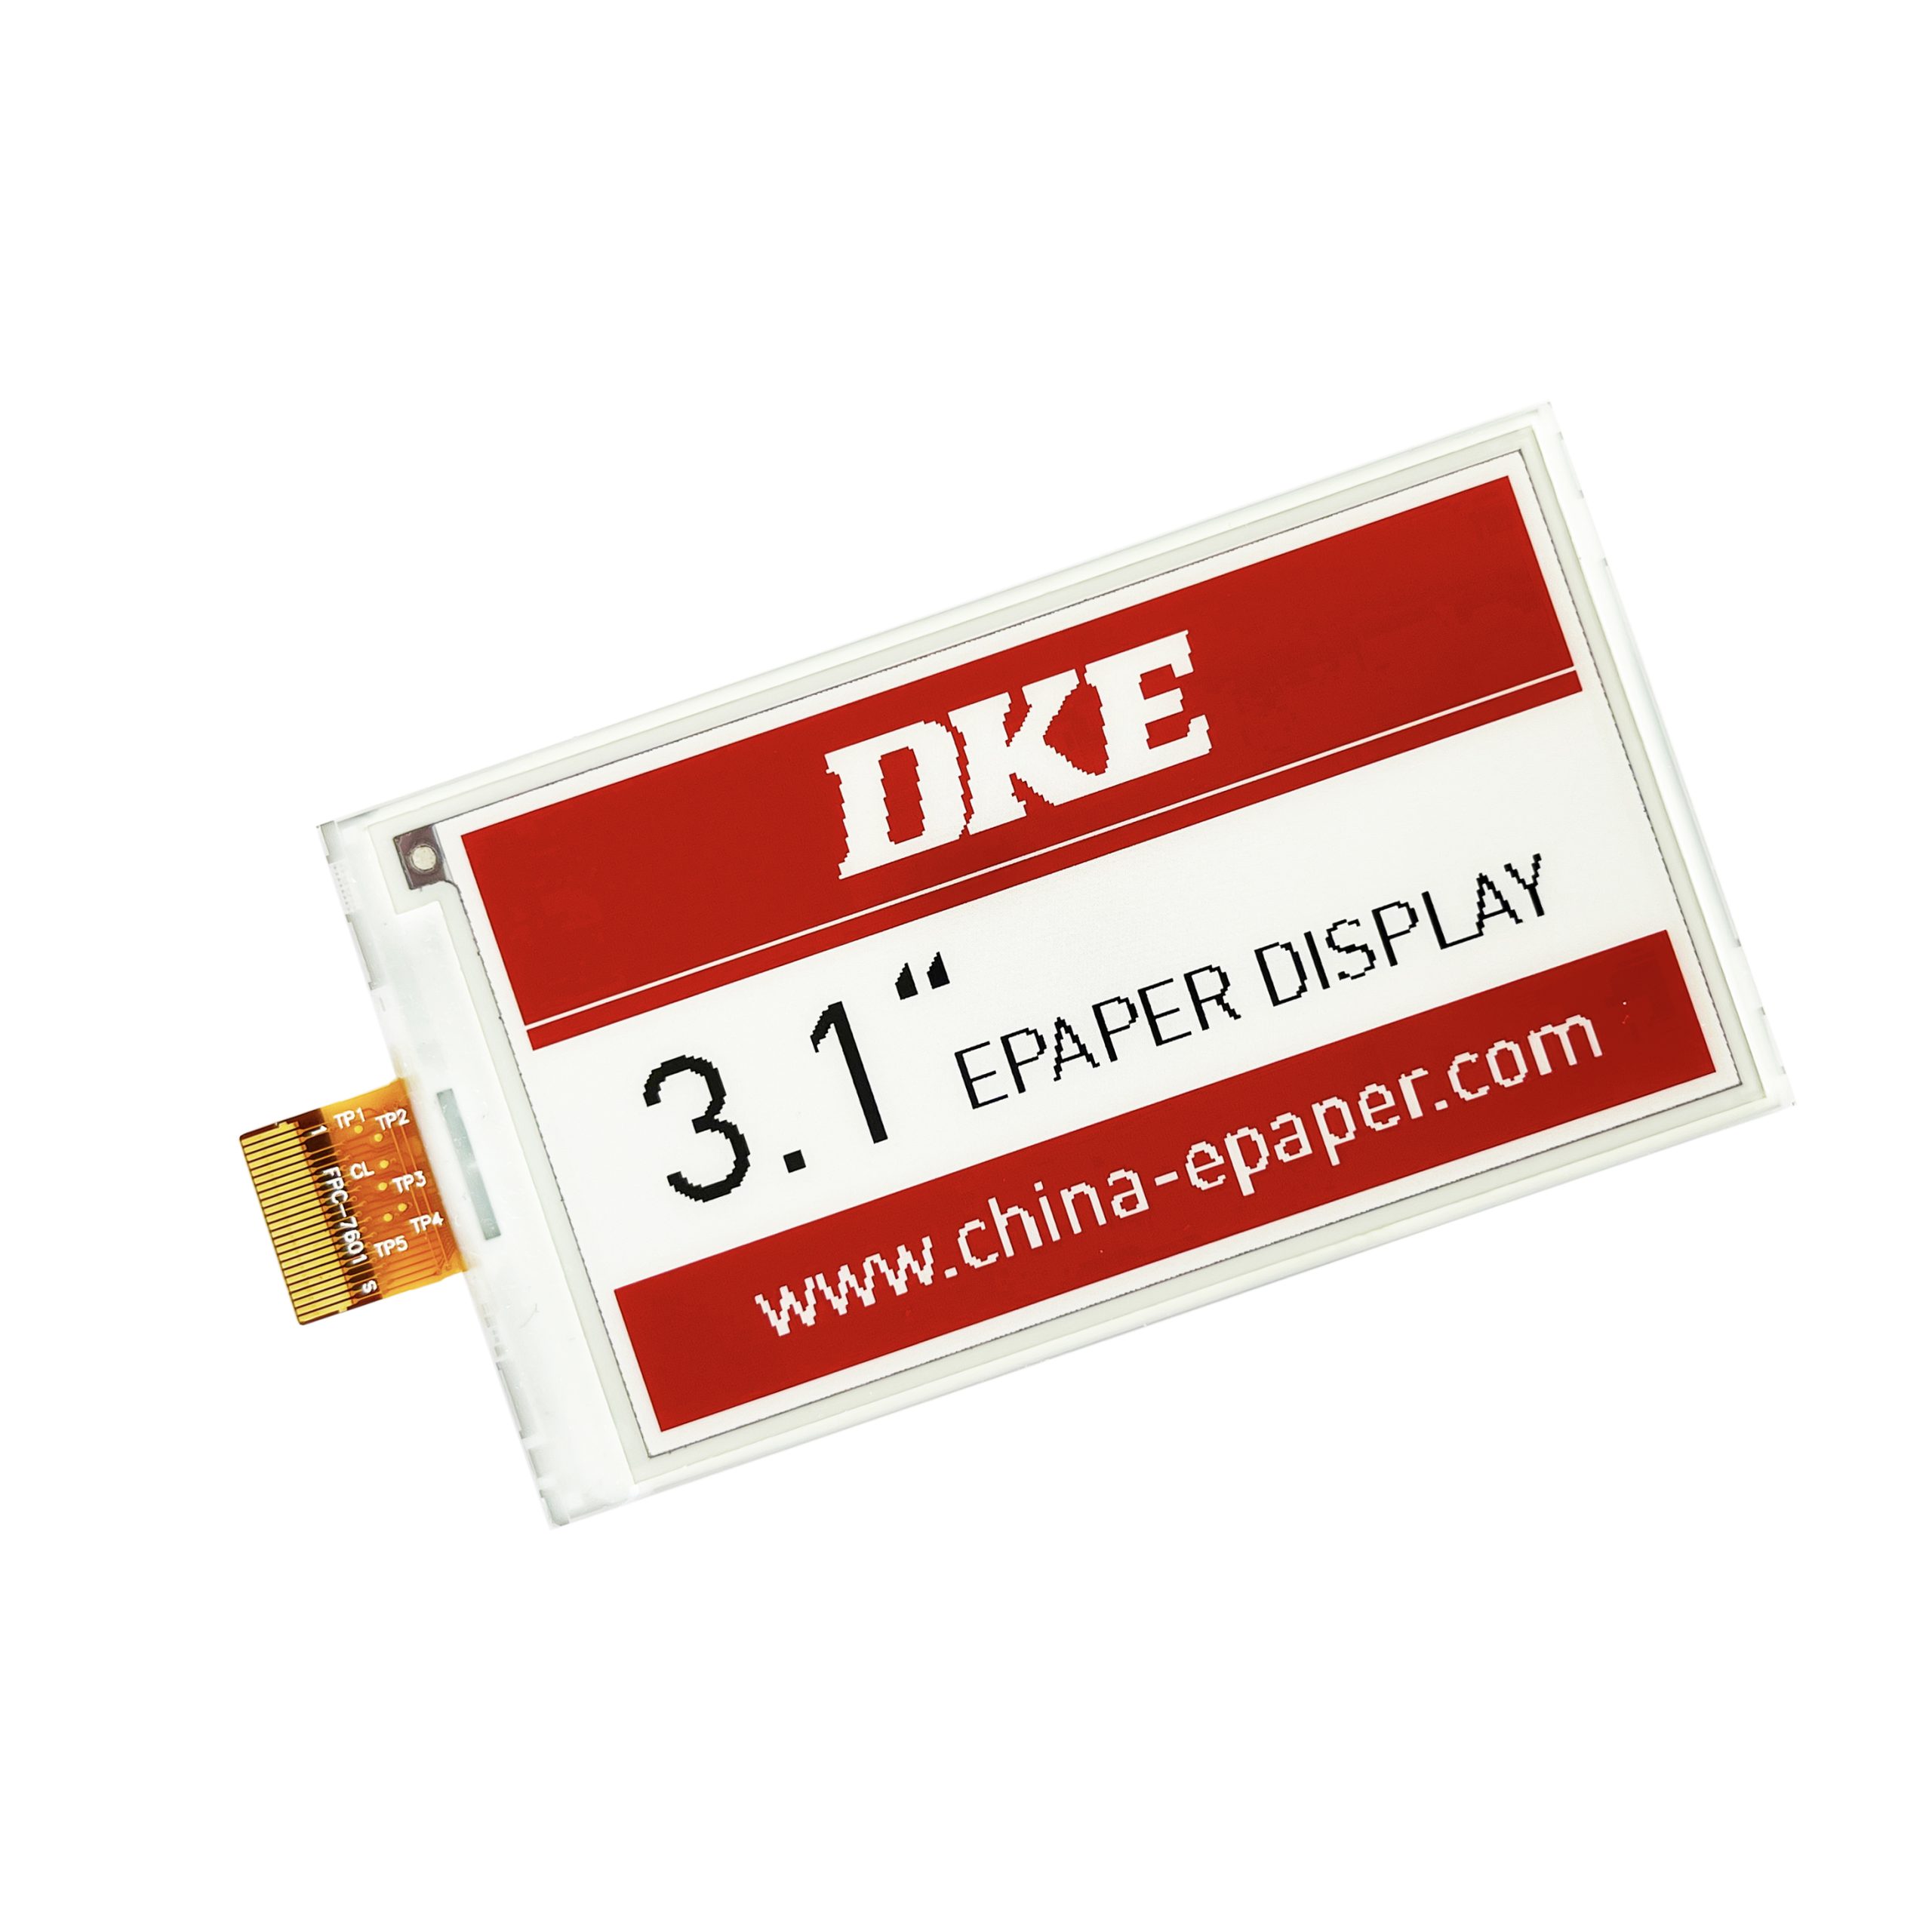 DKE 3.1 Inch Epaper Display